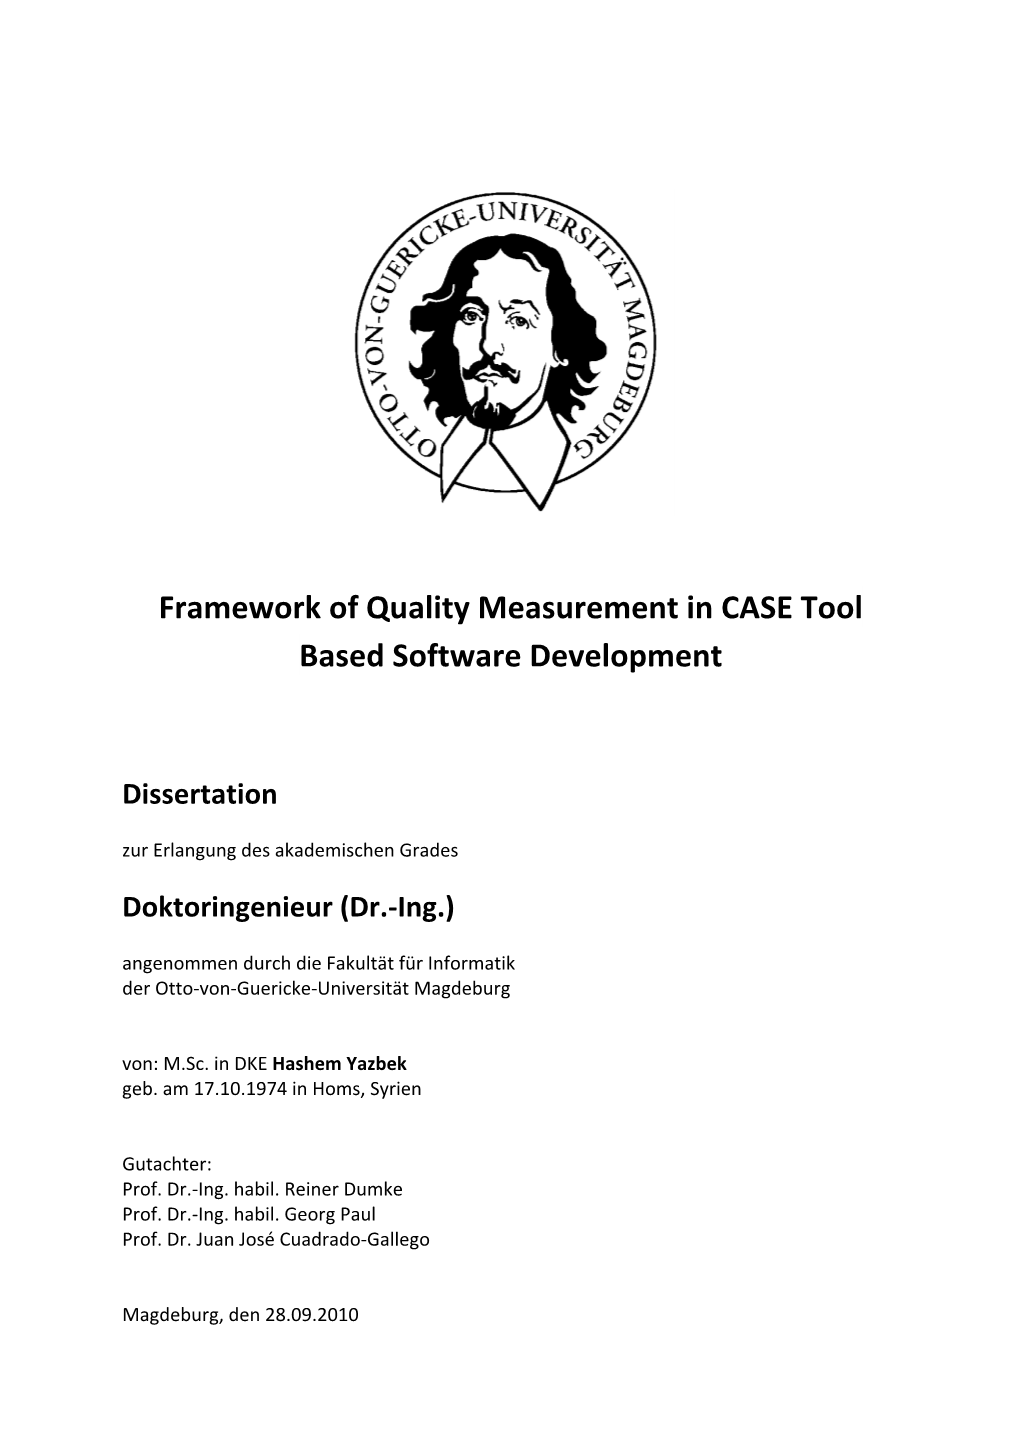 Framework of Quality Measurement in CASE Tool Based Software Development